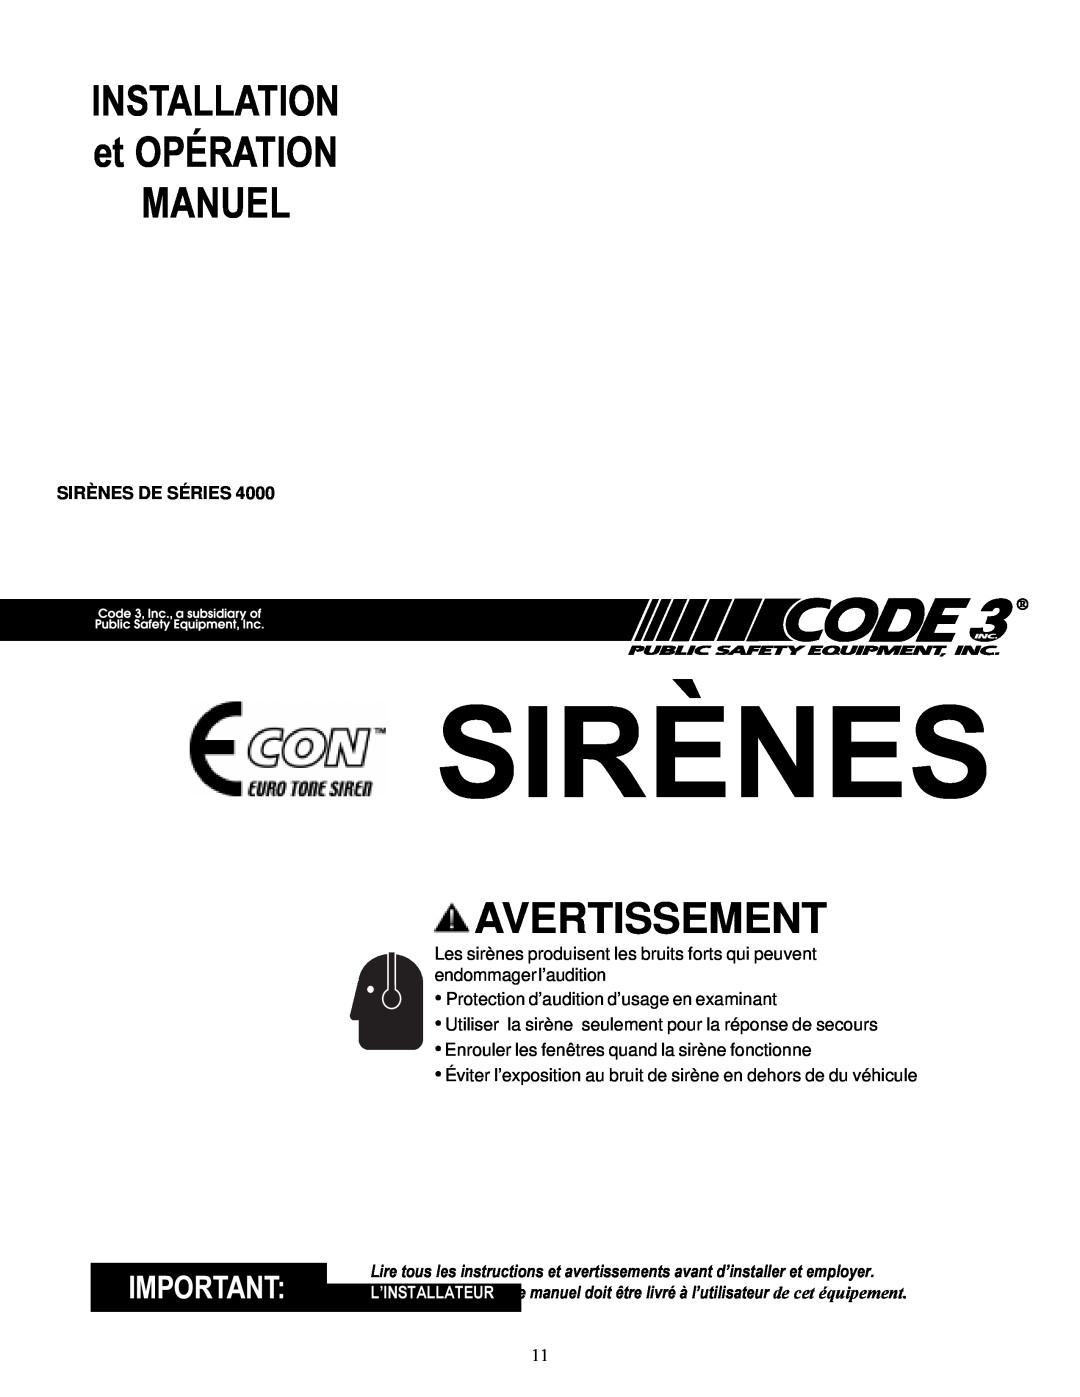 Bosch Appliances 4000 operation manual Sirènes De Séries, Avertissement, INSTALLATION et OPÉRATION MANUEL 